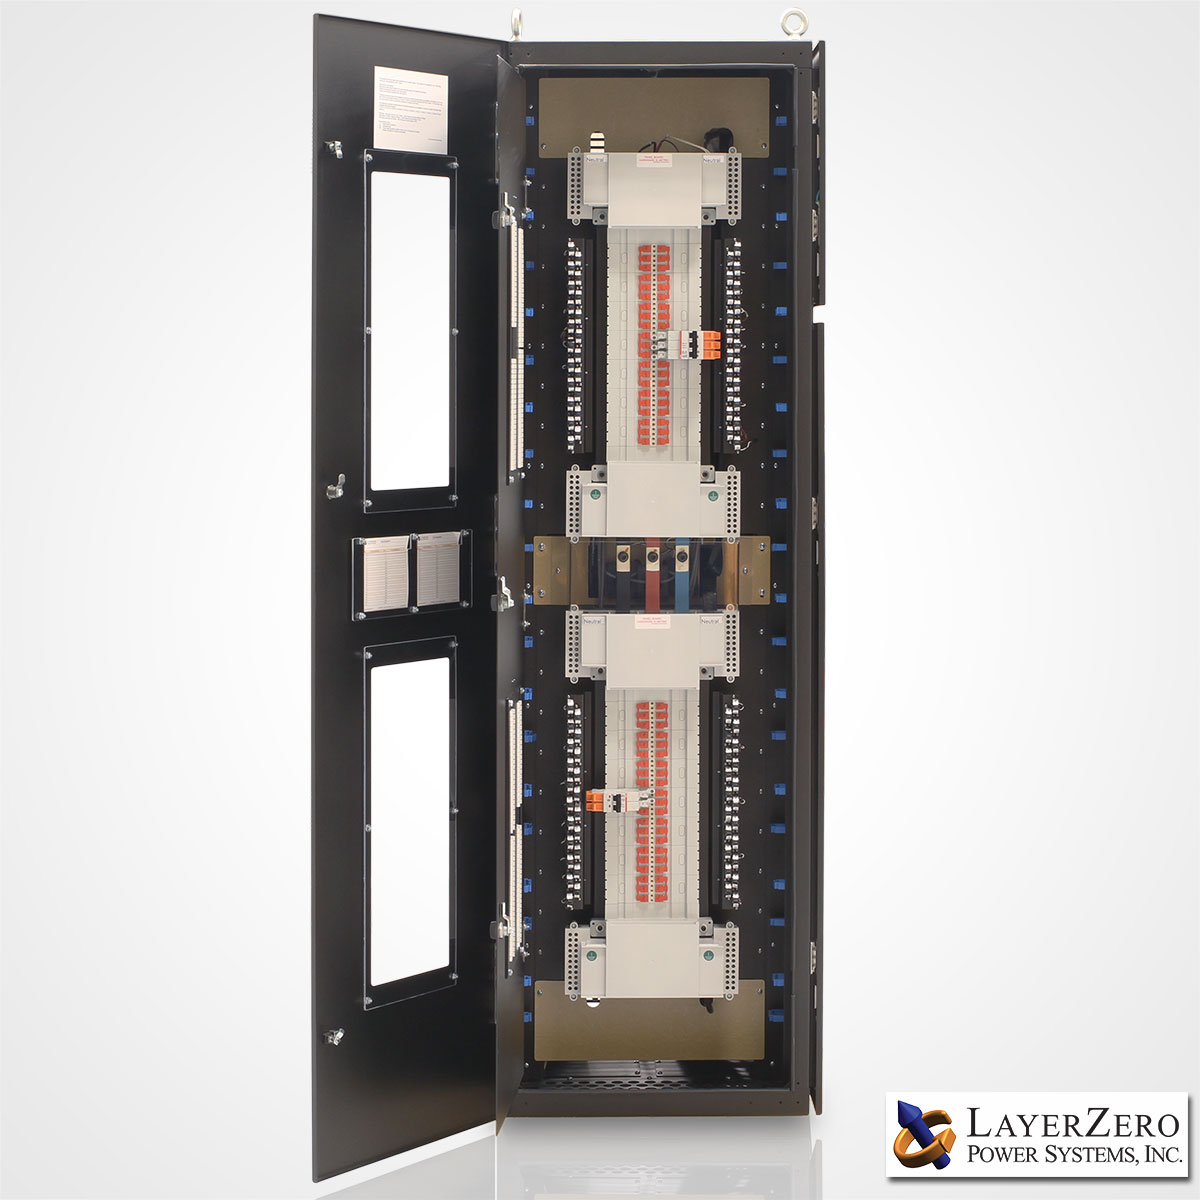 LayerZero Series 70: eRPP-FS SafePanel Finger Safe NFPA-70E Inspired Power Distribution.